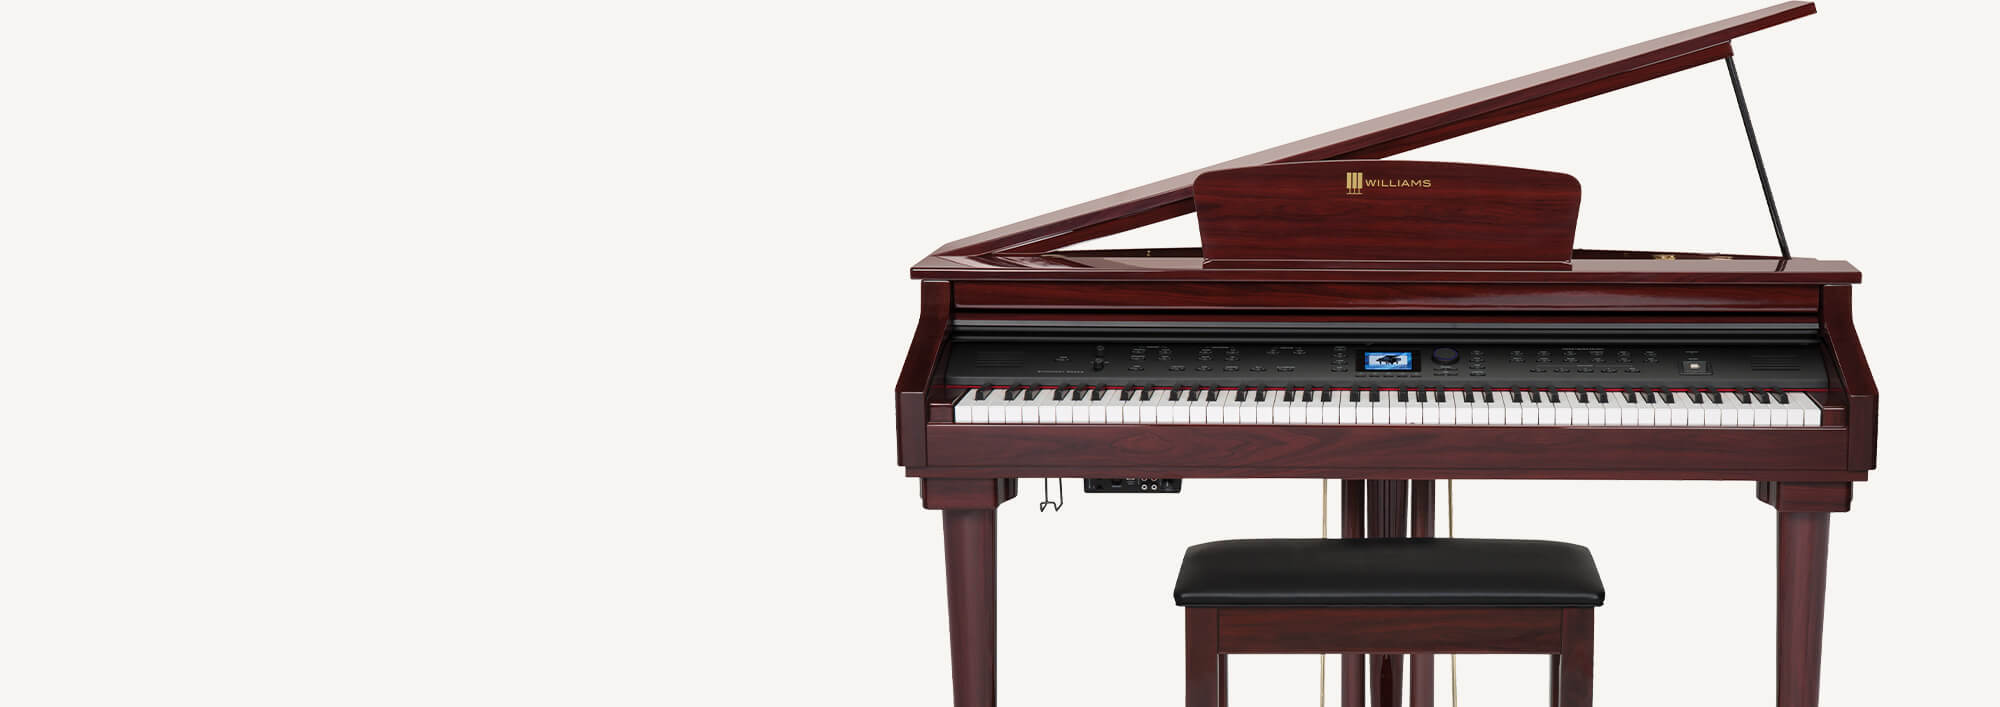 Williams Symphony Grand digital grand piano mahogany.